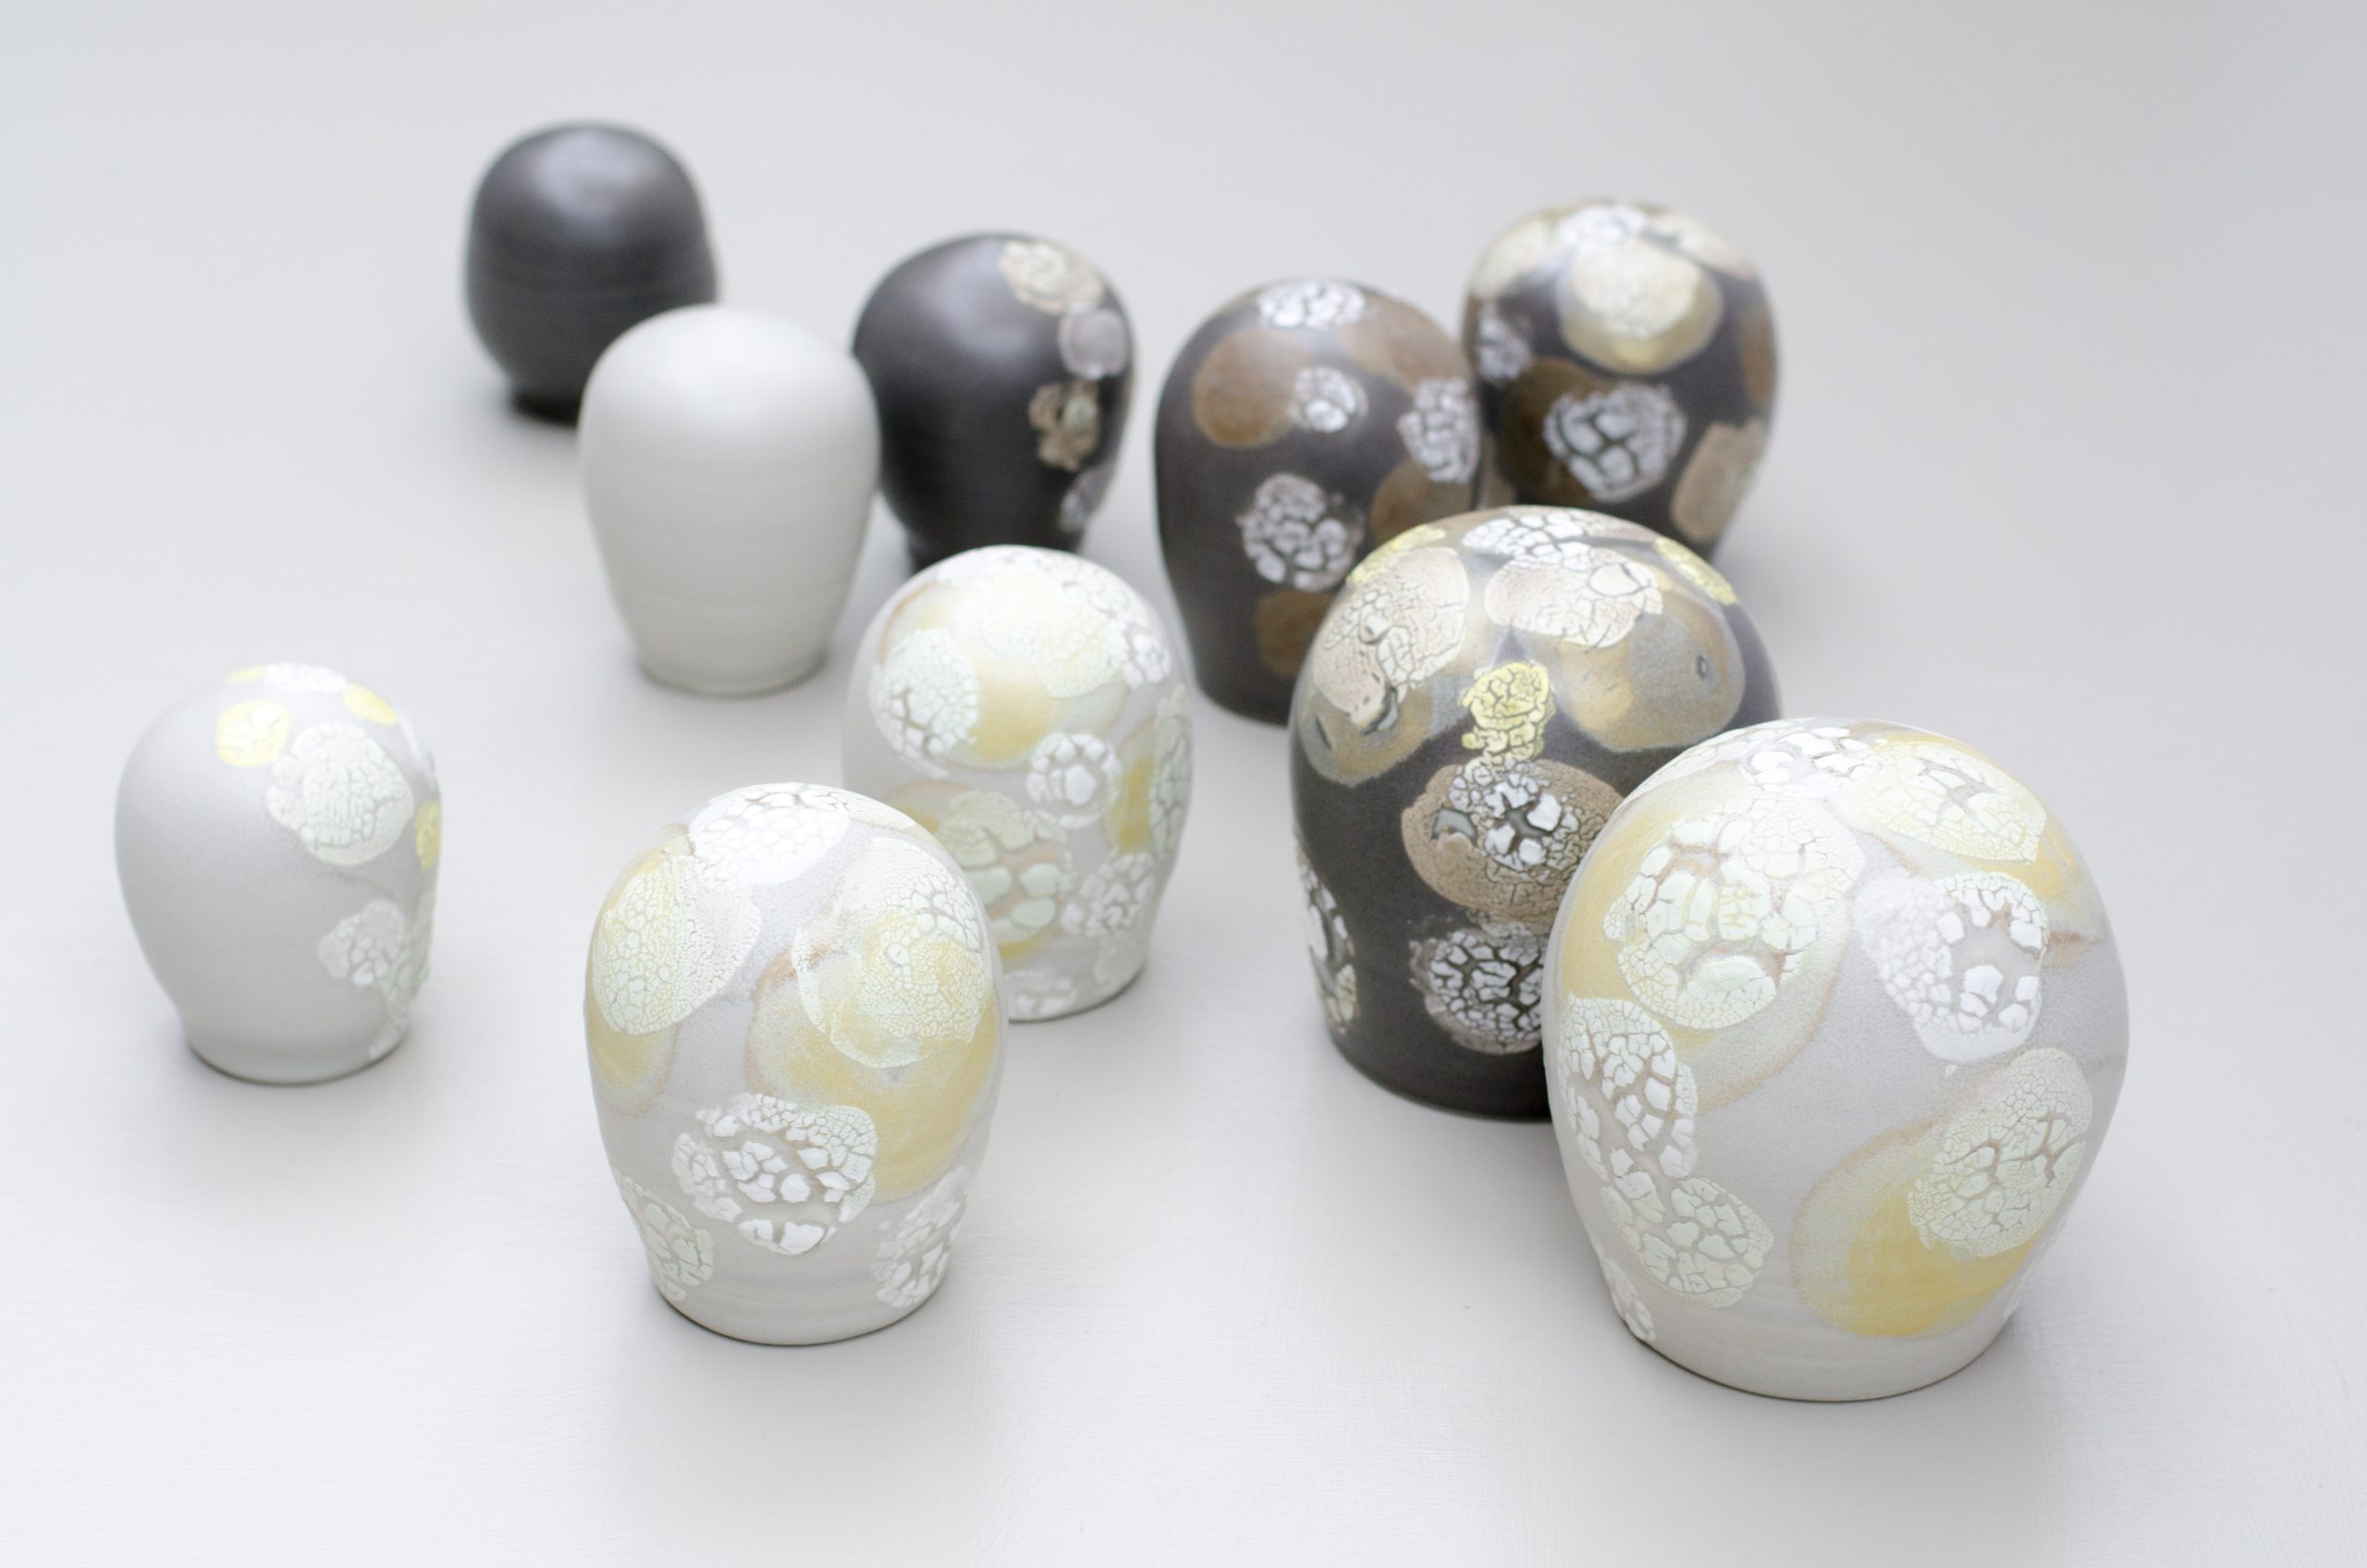 Lichen-glazed porcelain sculptural forms